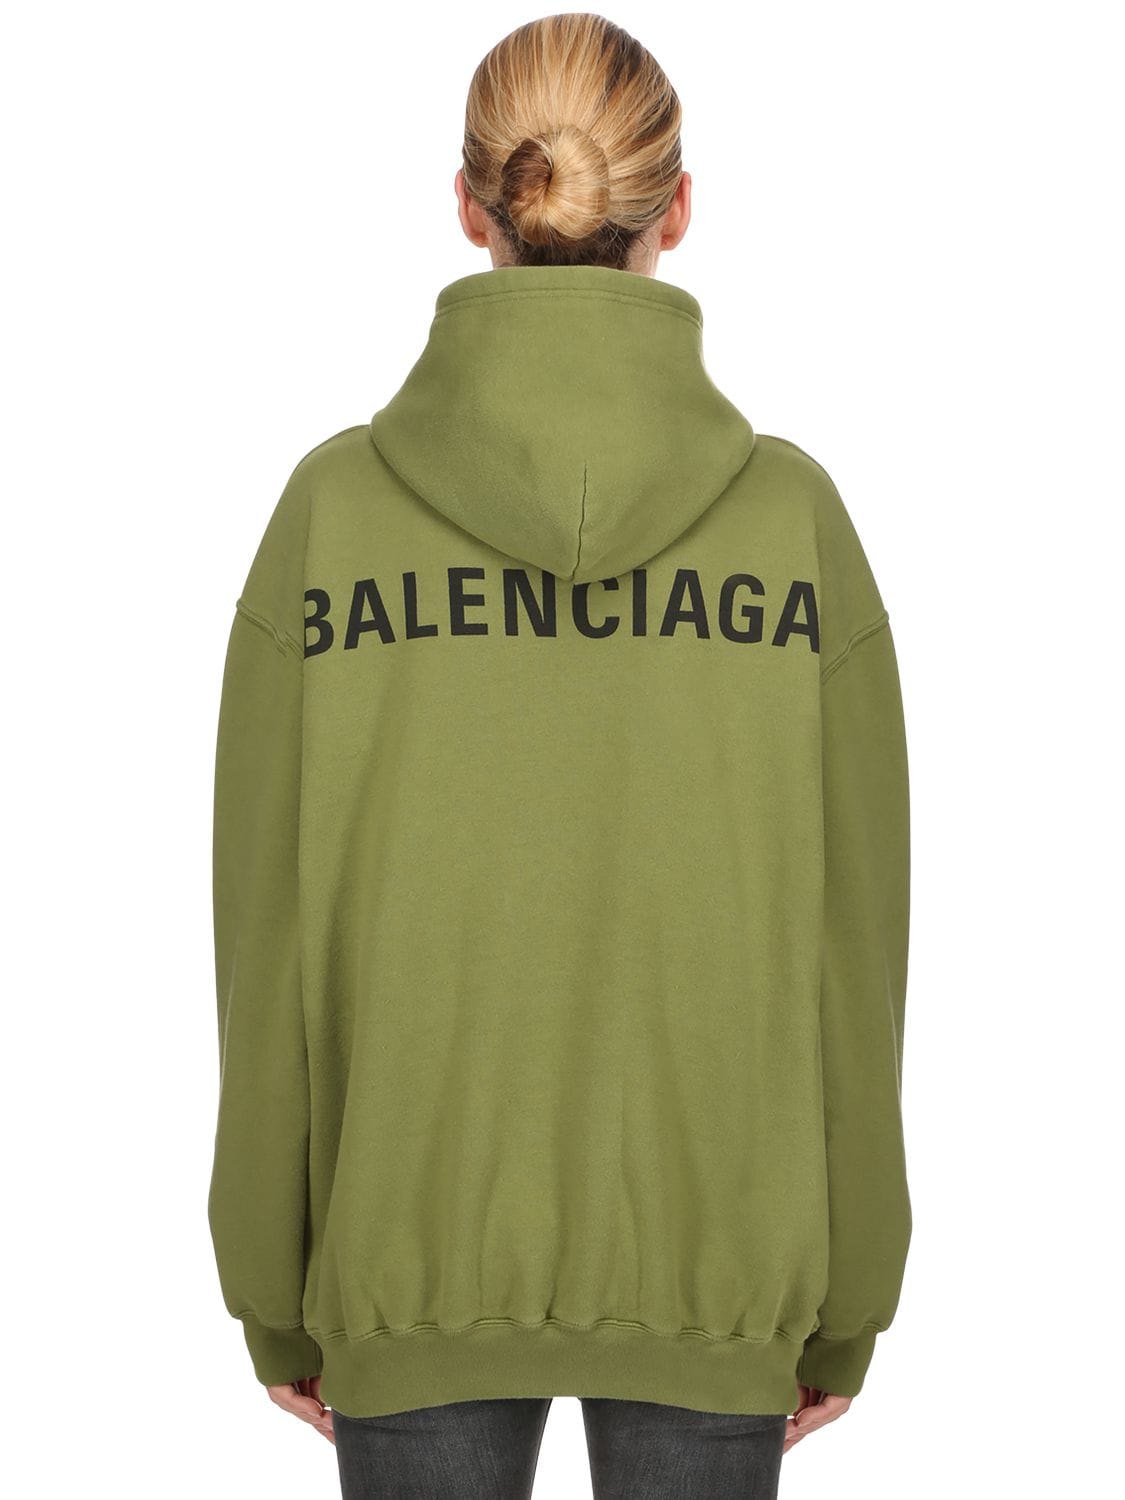 balenciaga hoodie womens olive